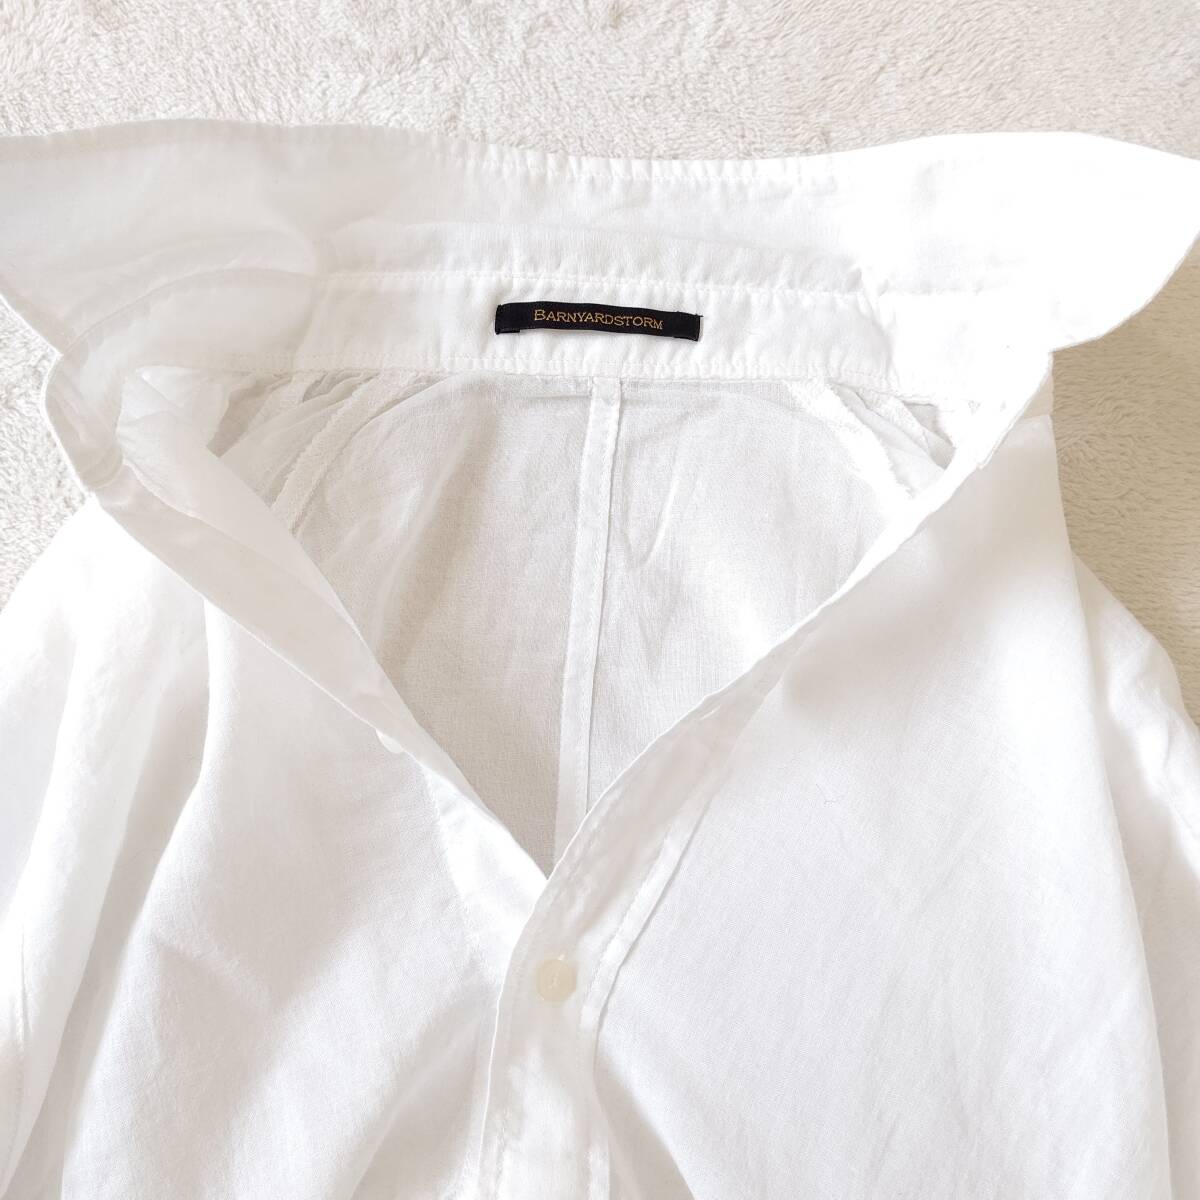 T668 美品 バンヤードストーム 透け感が可愛い ドルマンスリーブコットンシャツ BARNYARDSTORM ホワイト 白 サイズ1 レディース 羽織りの画像2